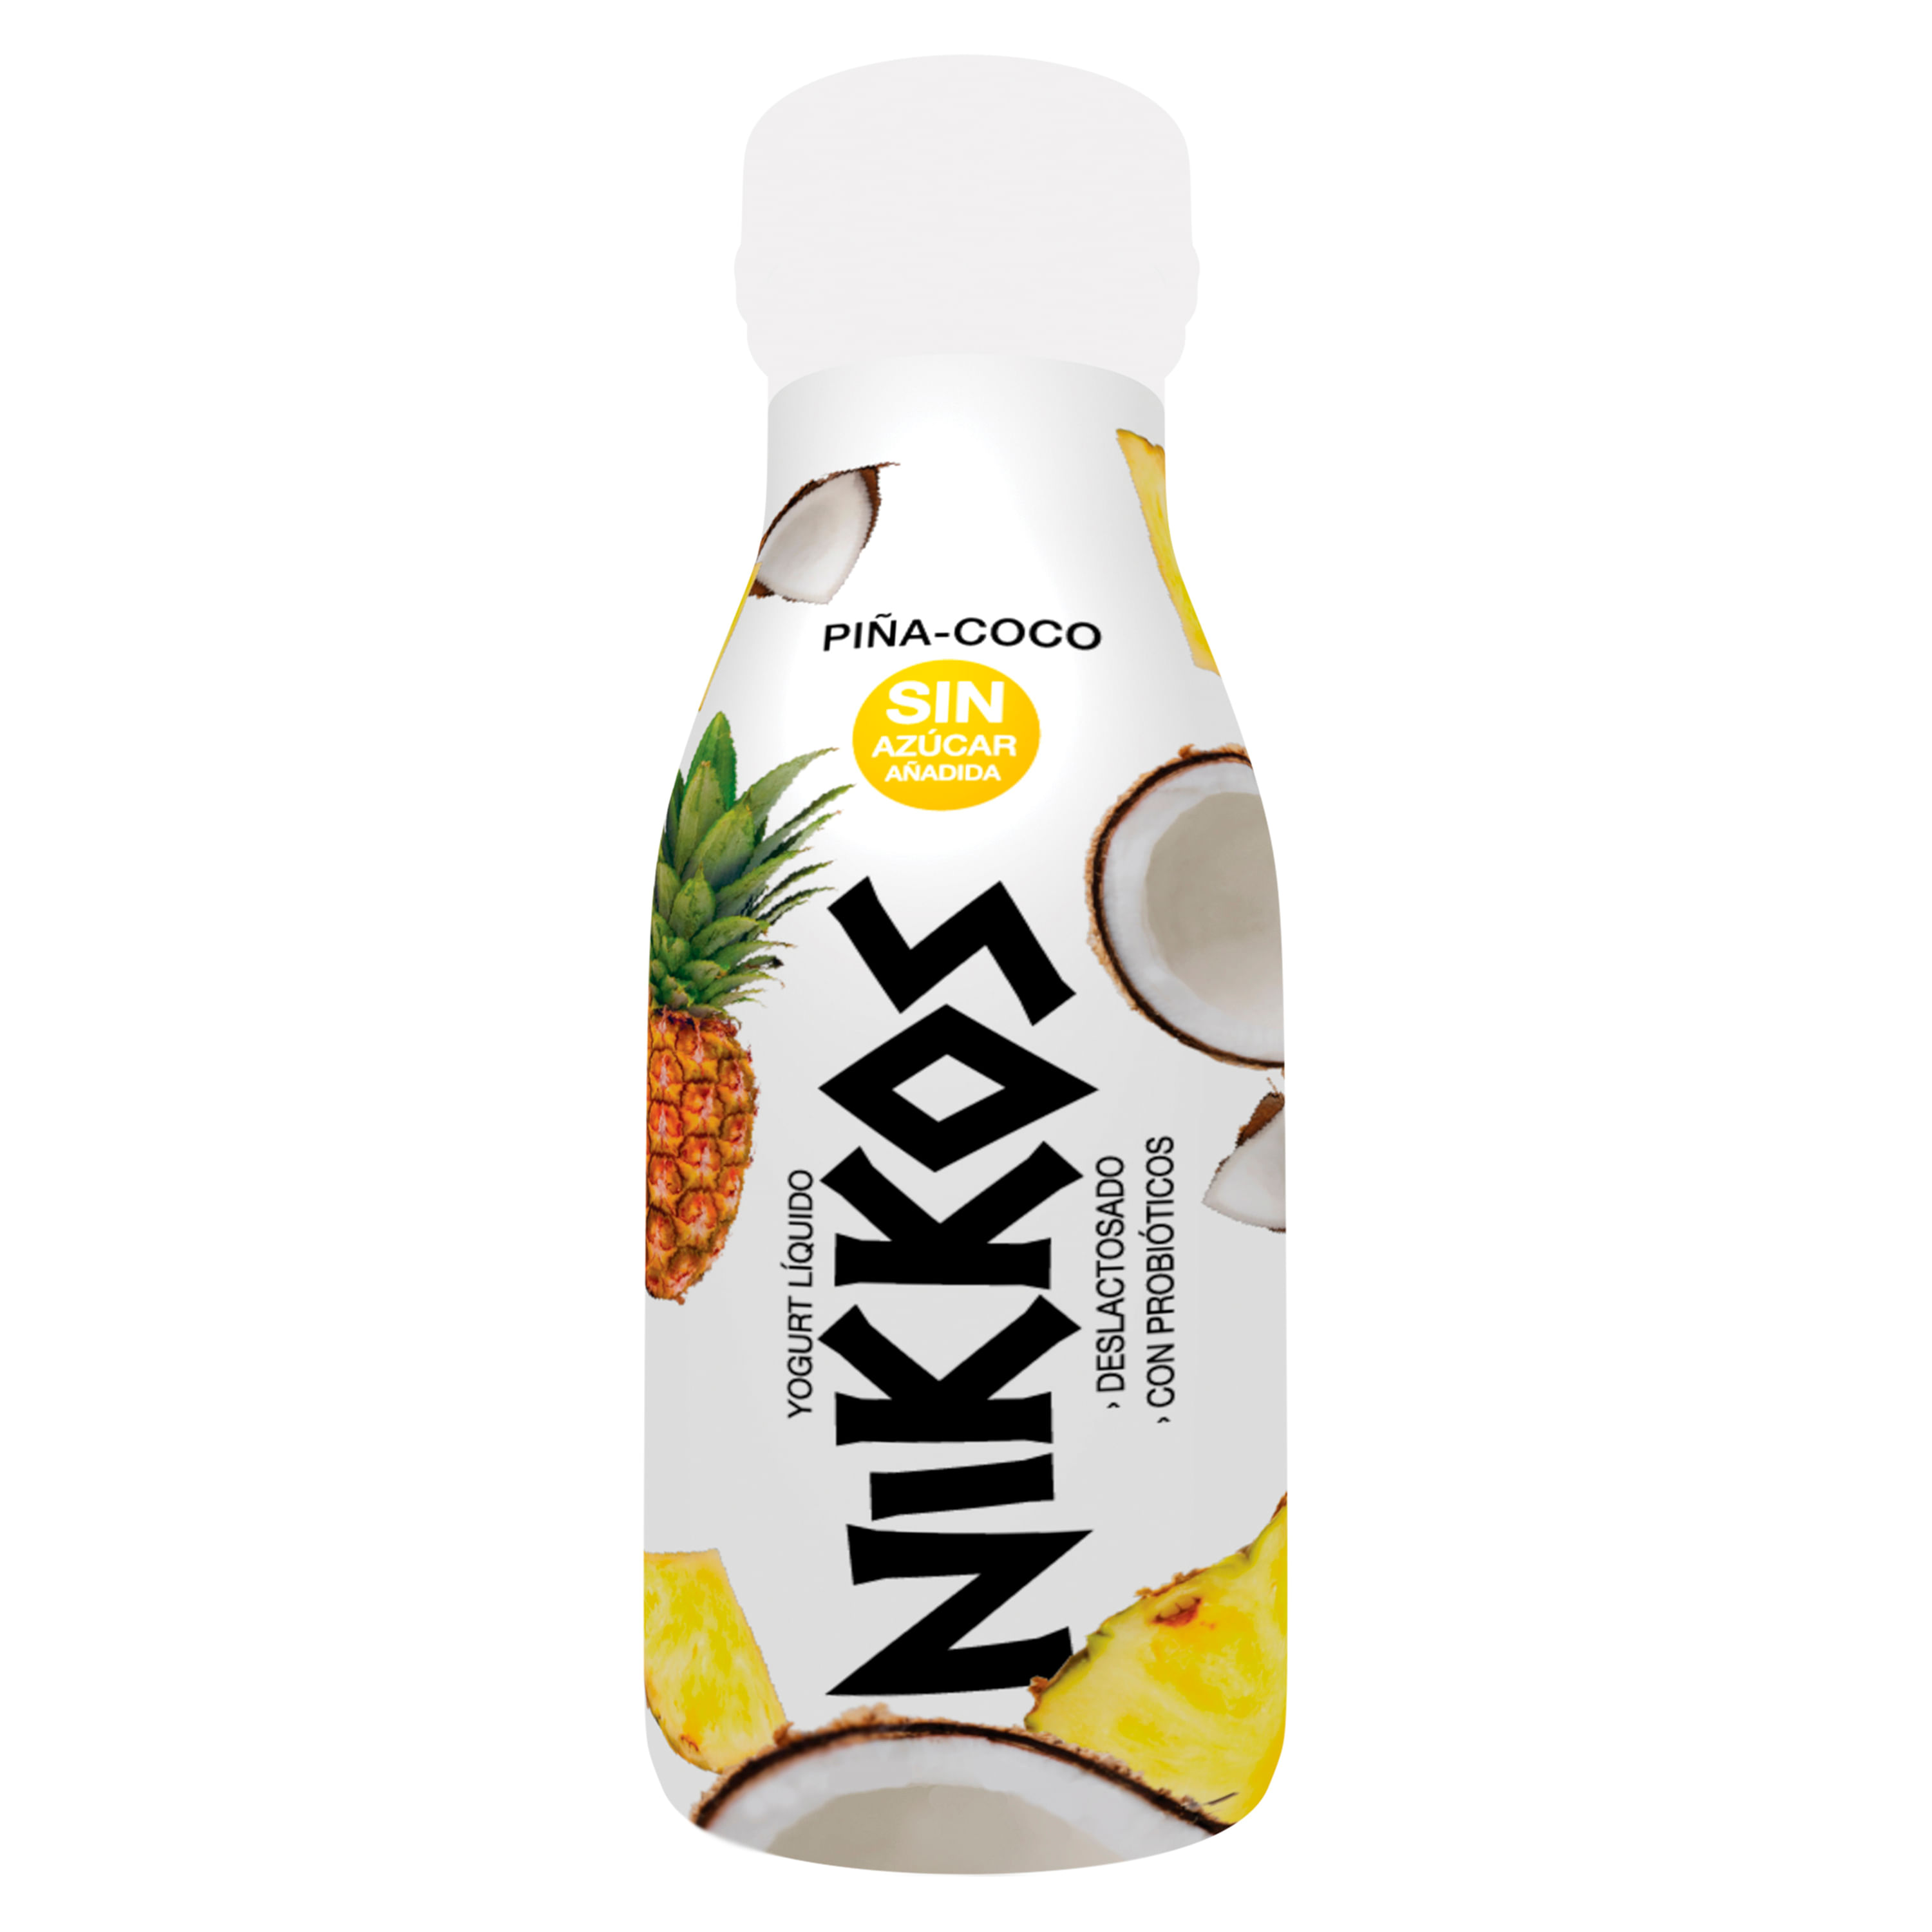 Yogurt-Nikkos-Pi-a-Coco-230-gr-Yogurt-Nikkos-Yogurt-Pina-Coco-230-Gr-1-27641